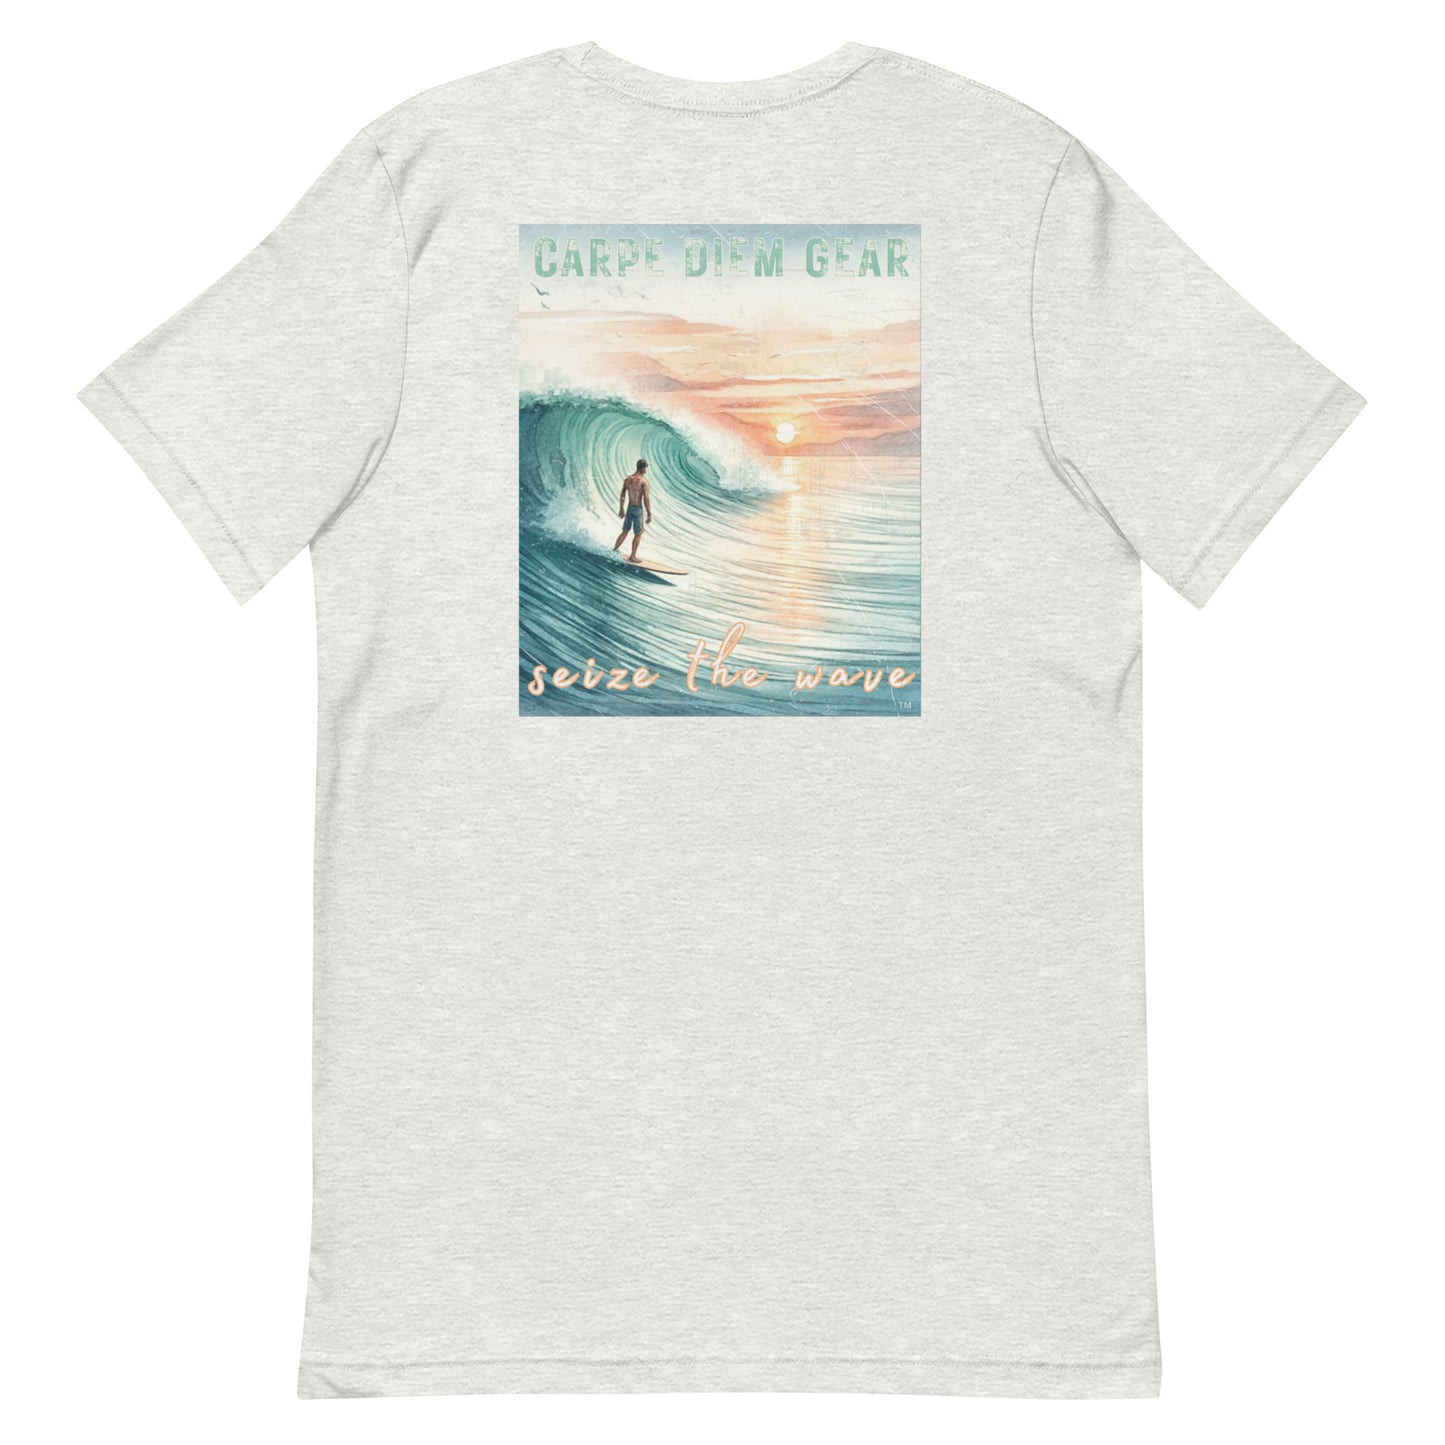 Carpe Diem Gear | Surf's Up | Watercolor Longboard Surfing Vert | Unisex 100% Ring-Spun Cotton